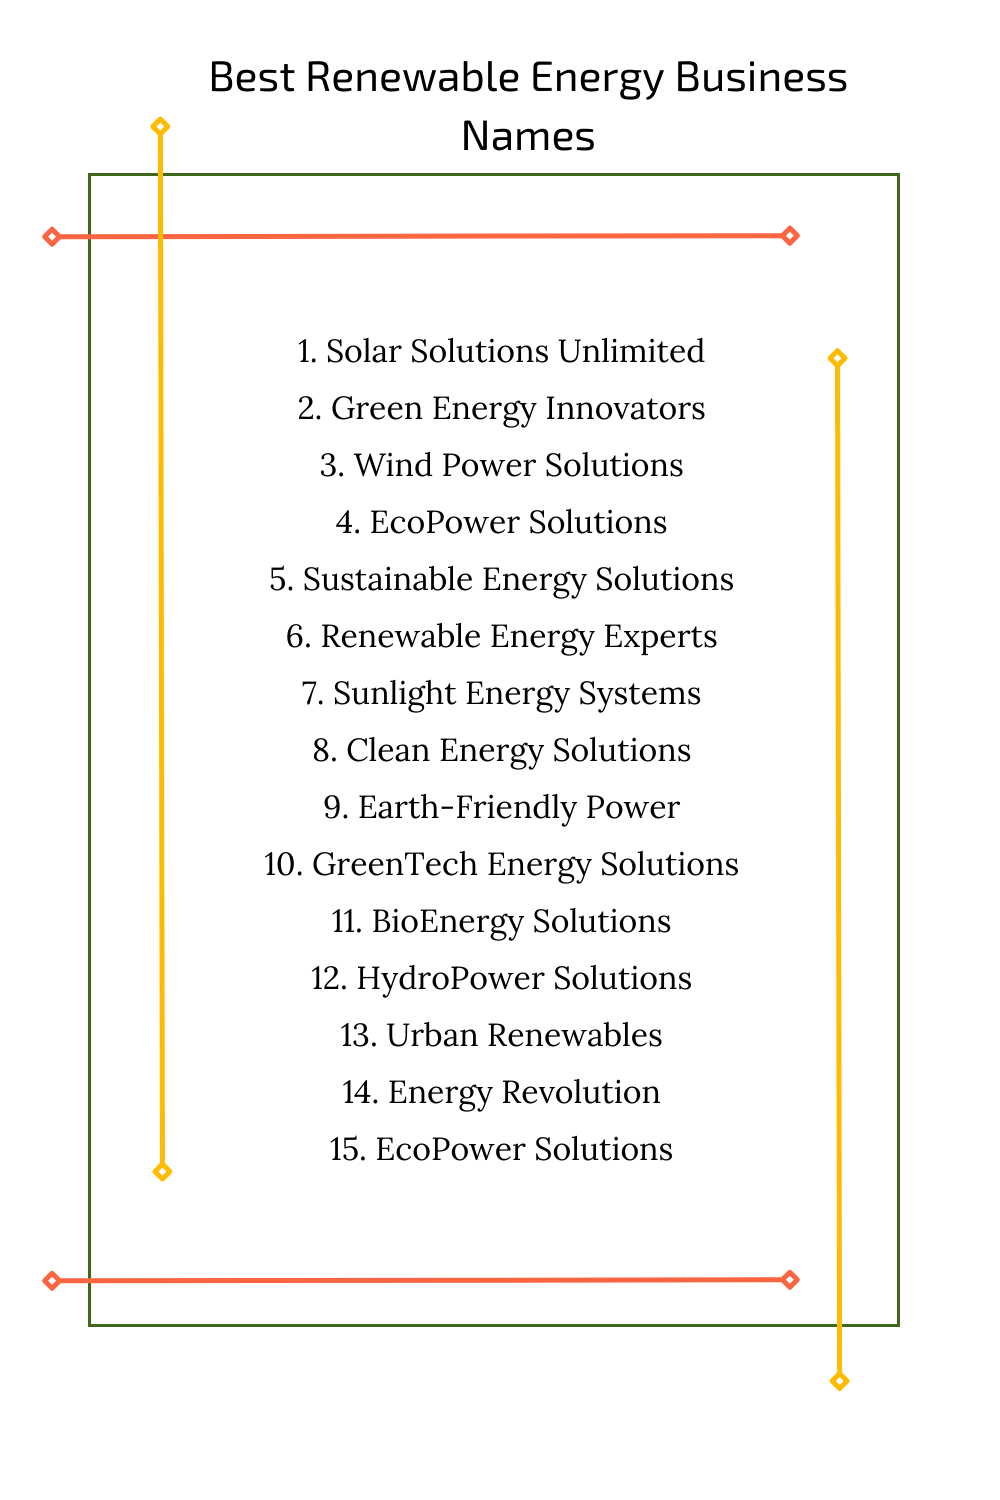 Best Renewable Energy Business Names